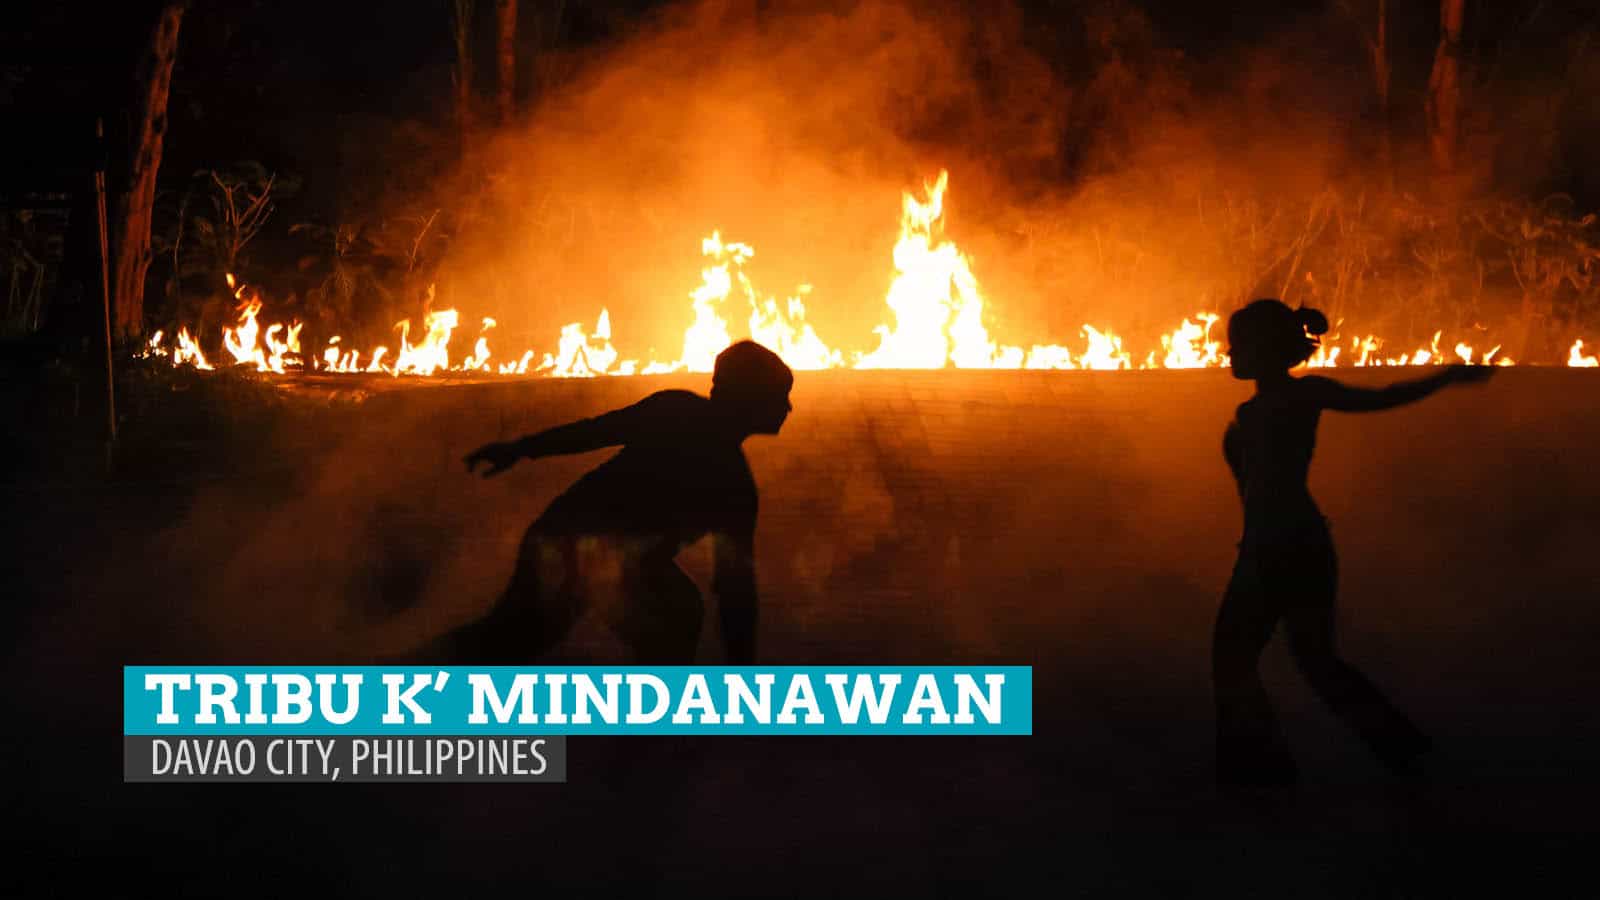 Tribu K’ Mindanawan: A Glimpse of Indigenous Mindanao in Davao